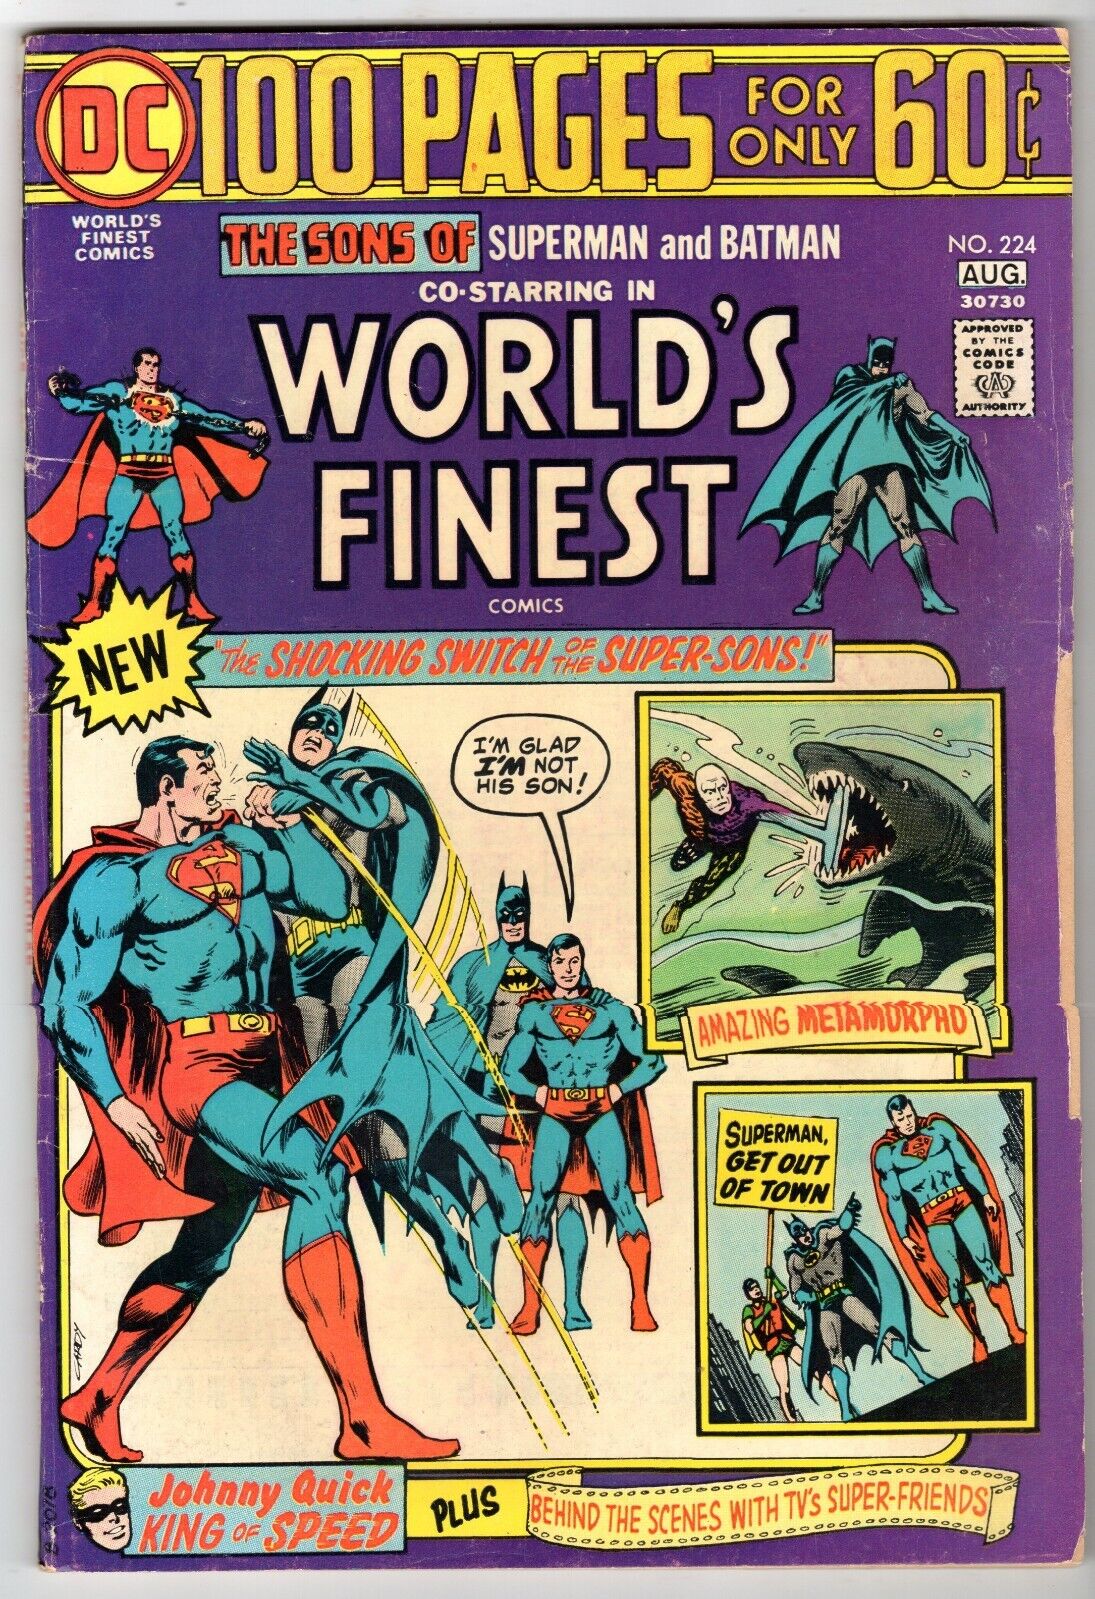 World's Finest #224 Featuring Superman & Batman, Very Good Condition